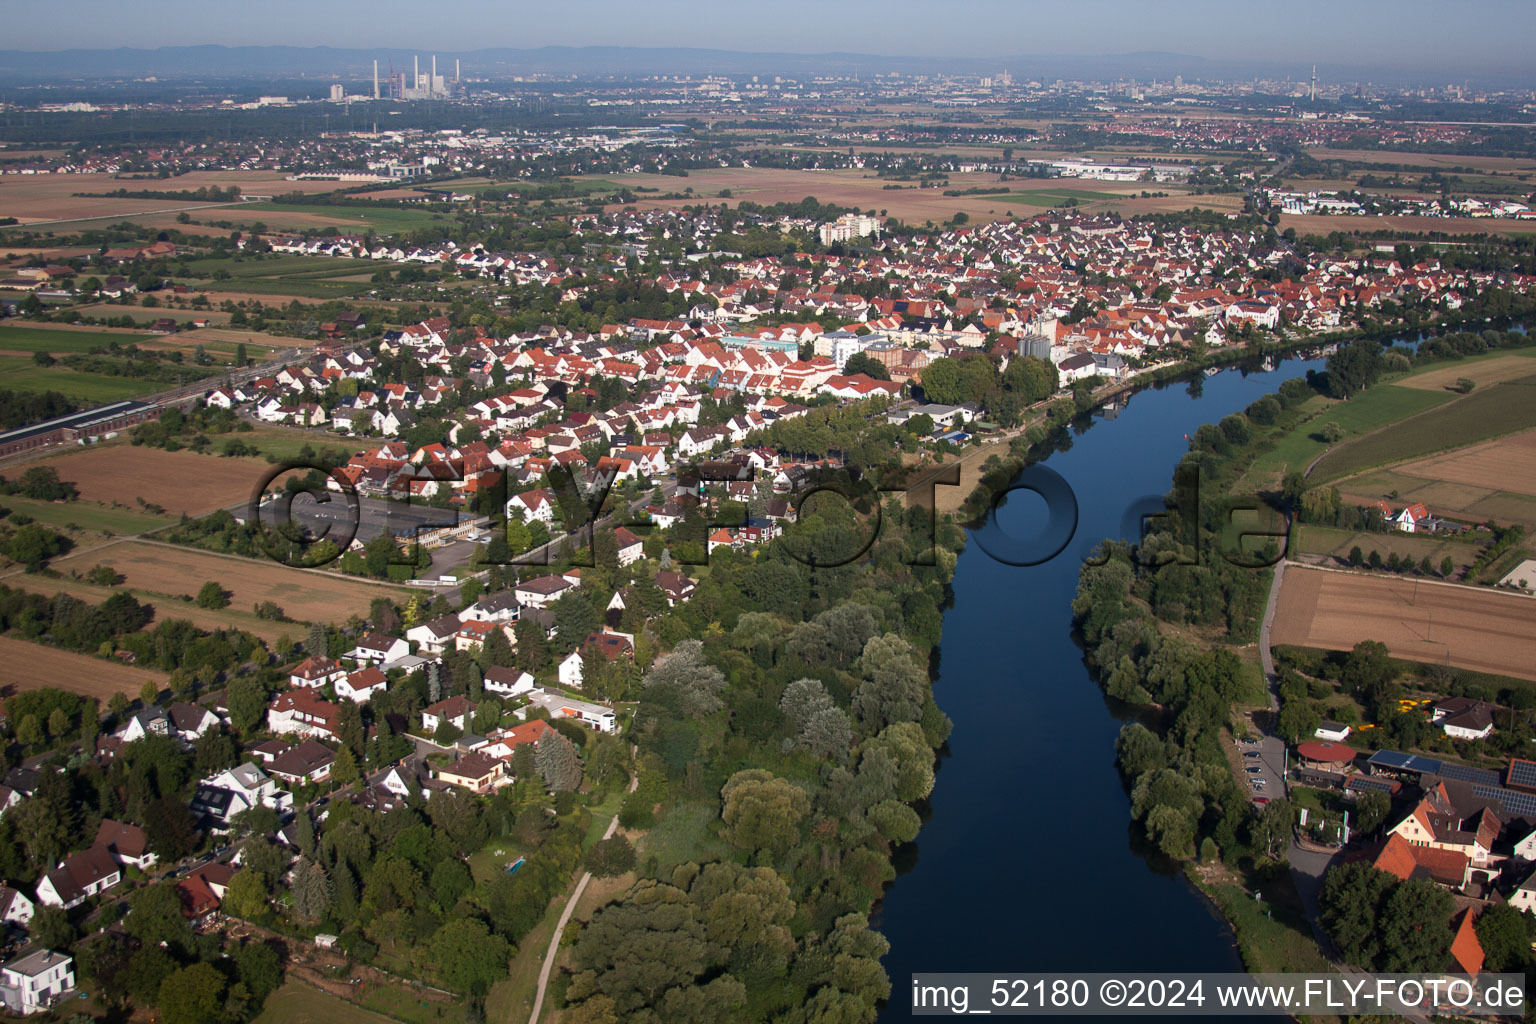 Town on the banks of the river of the river Neckar in the district Edingen in Edingen-Neckarhausen in the state Baden-Wurttemberg